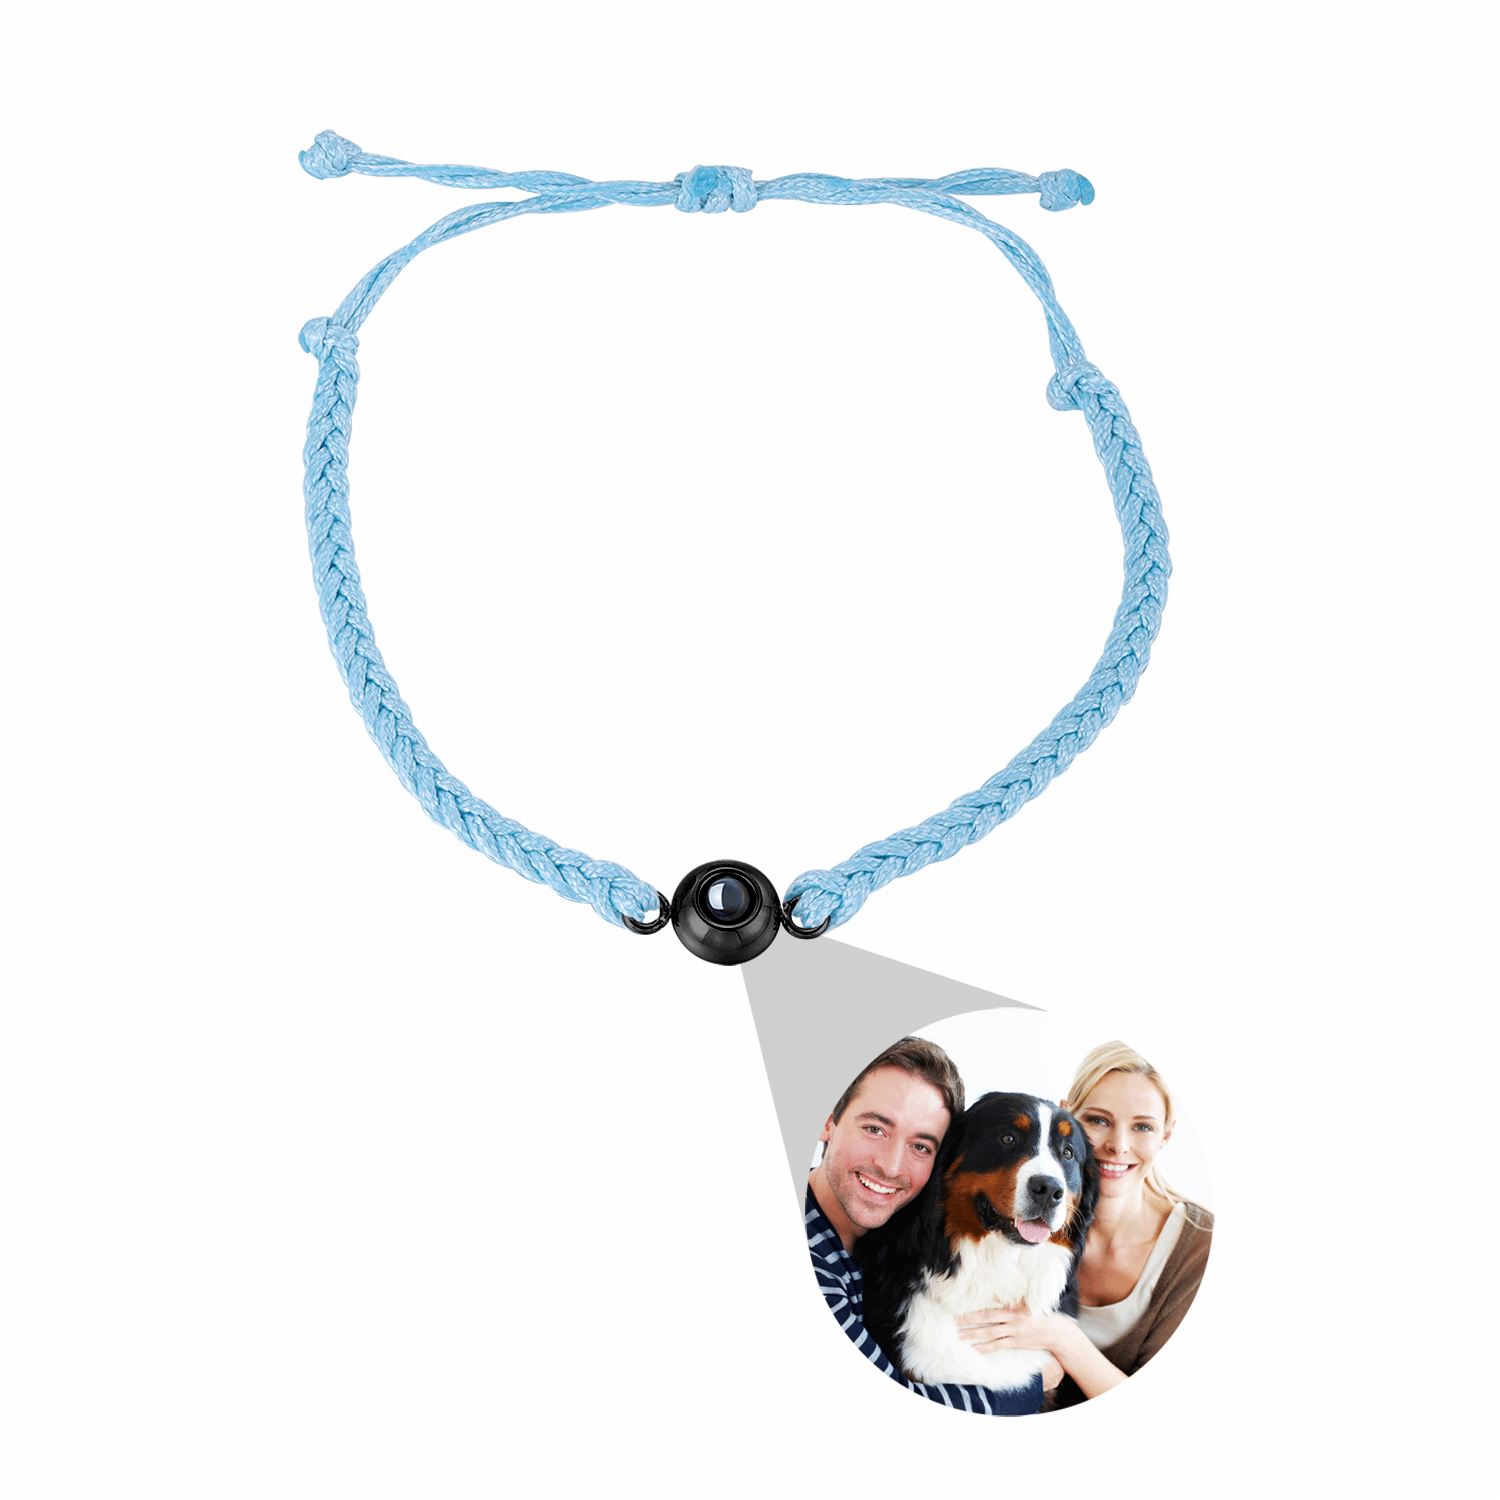 Personalised Photo Projection Bracelet